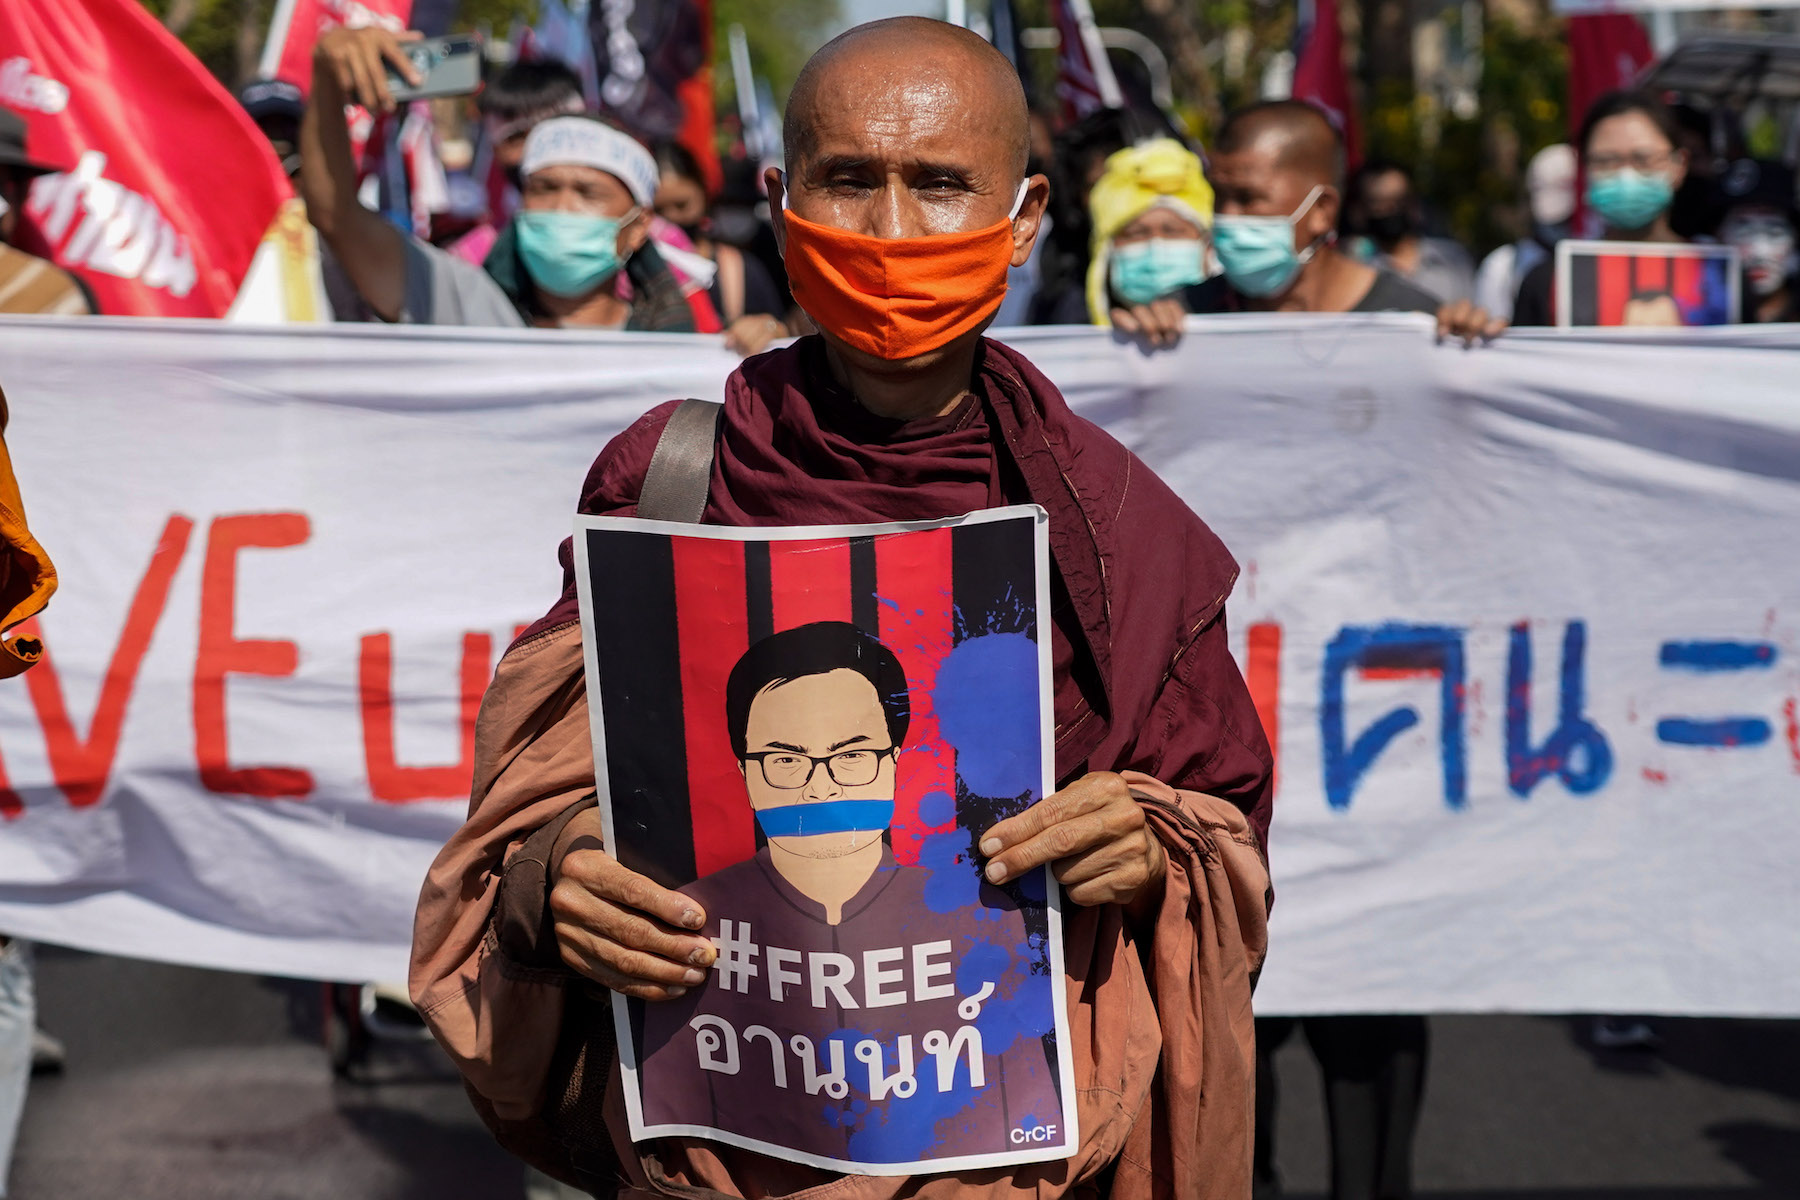 Thailand protesters led by Jatupat Pai Boonpattararaksa